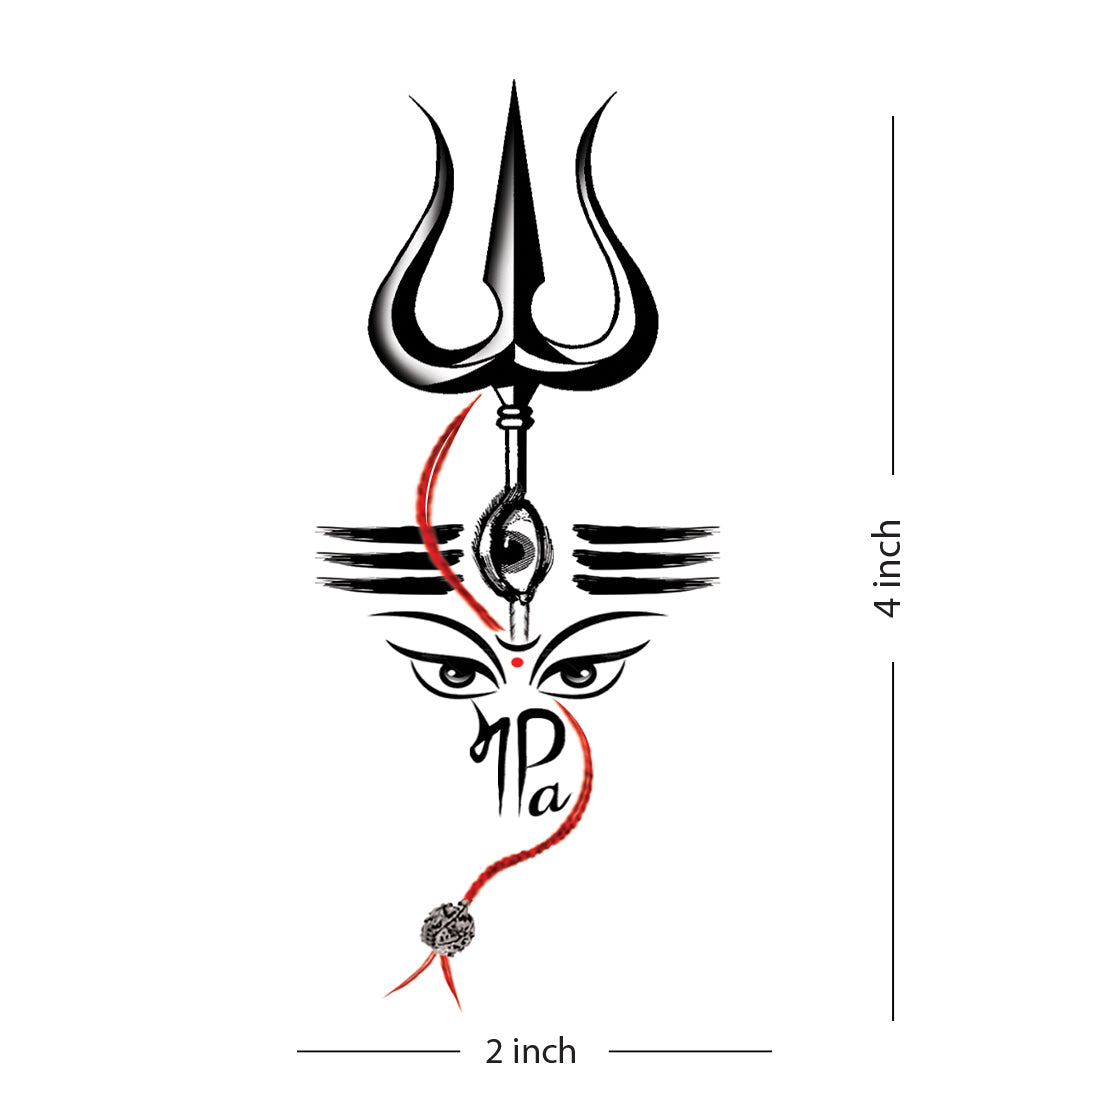 Trishul tattoo with mahadev font and tilak | Tattoos, Trishul, Mahadev